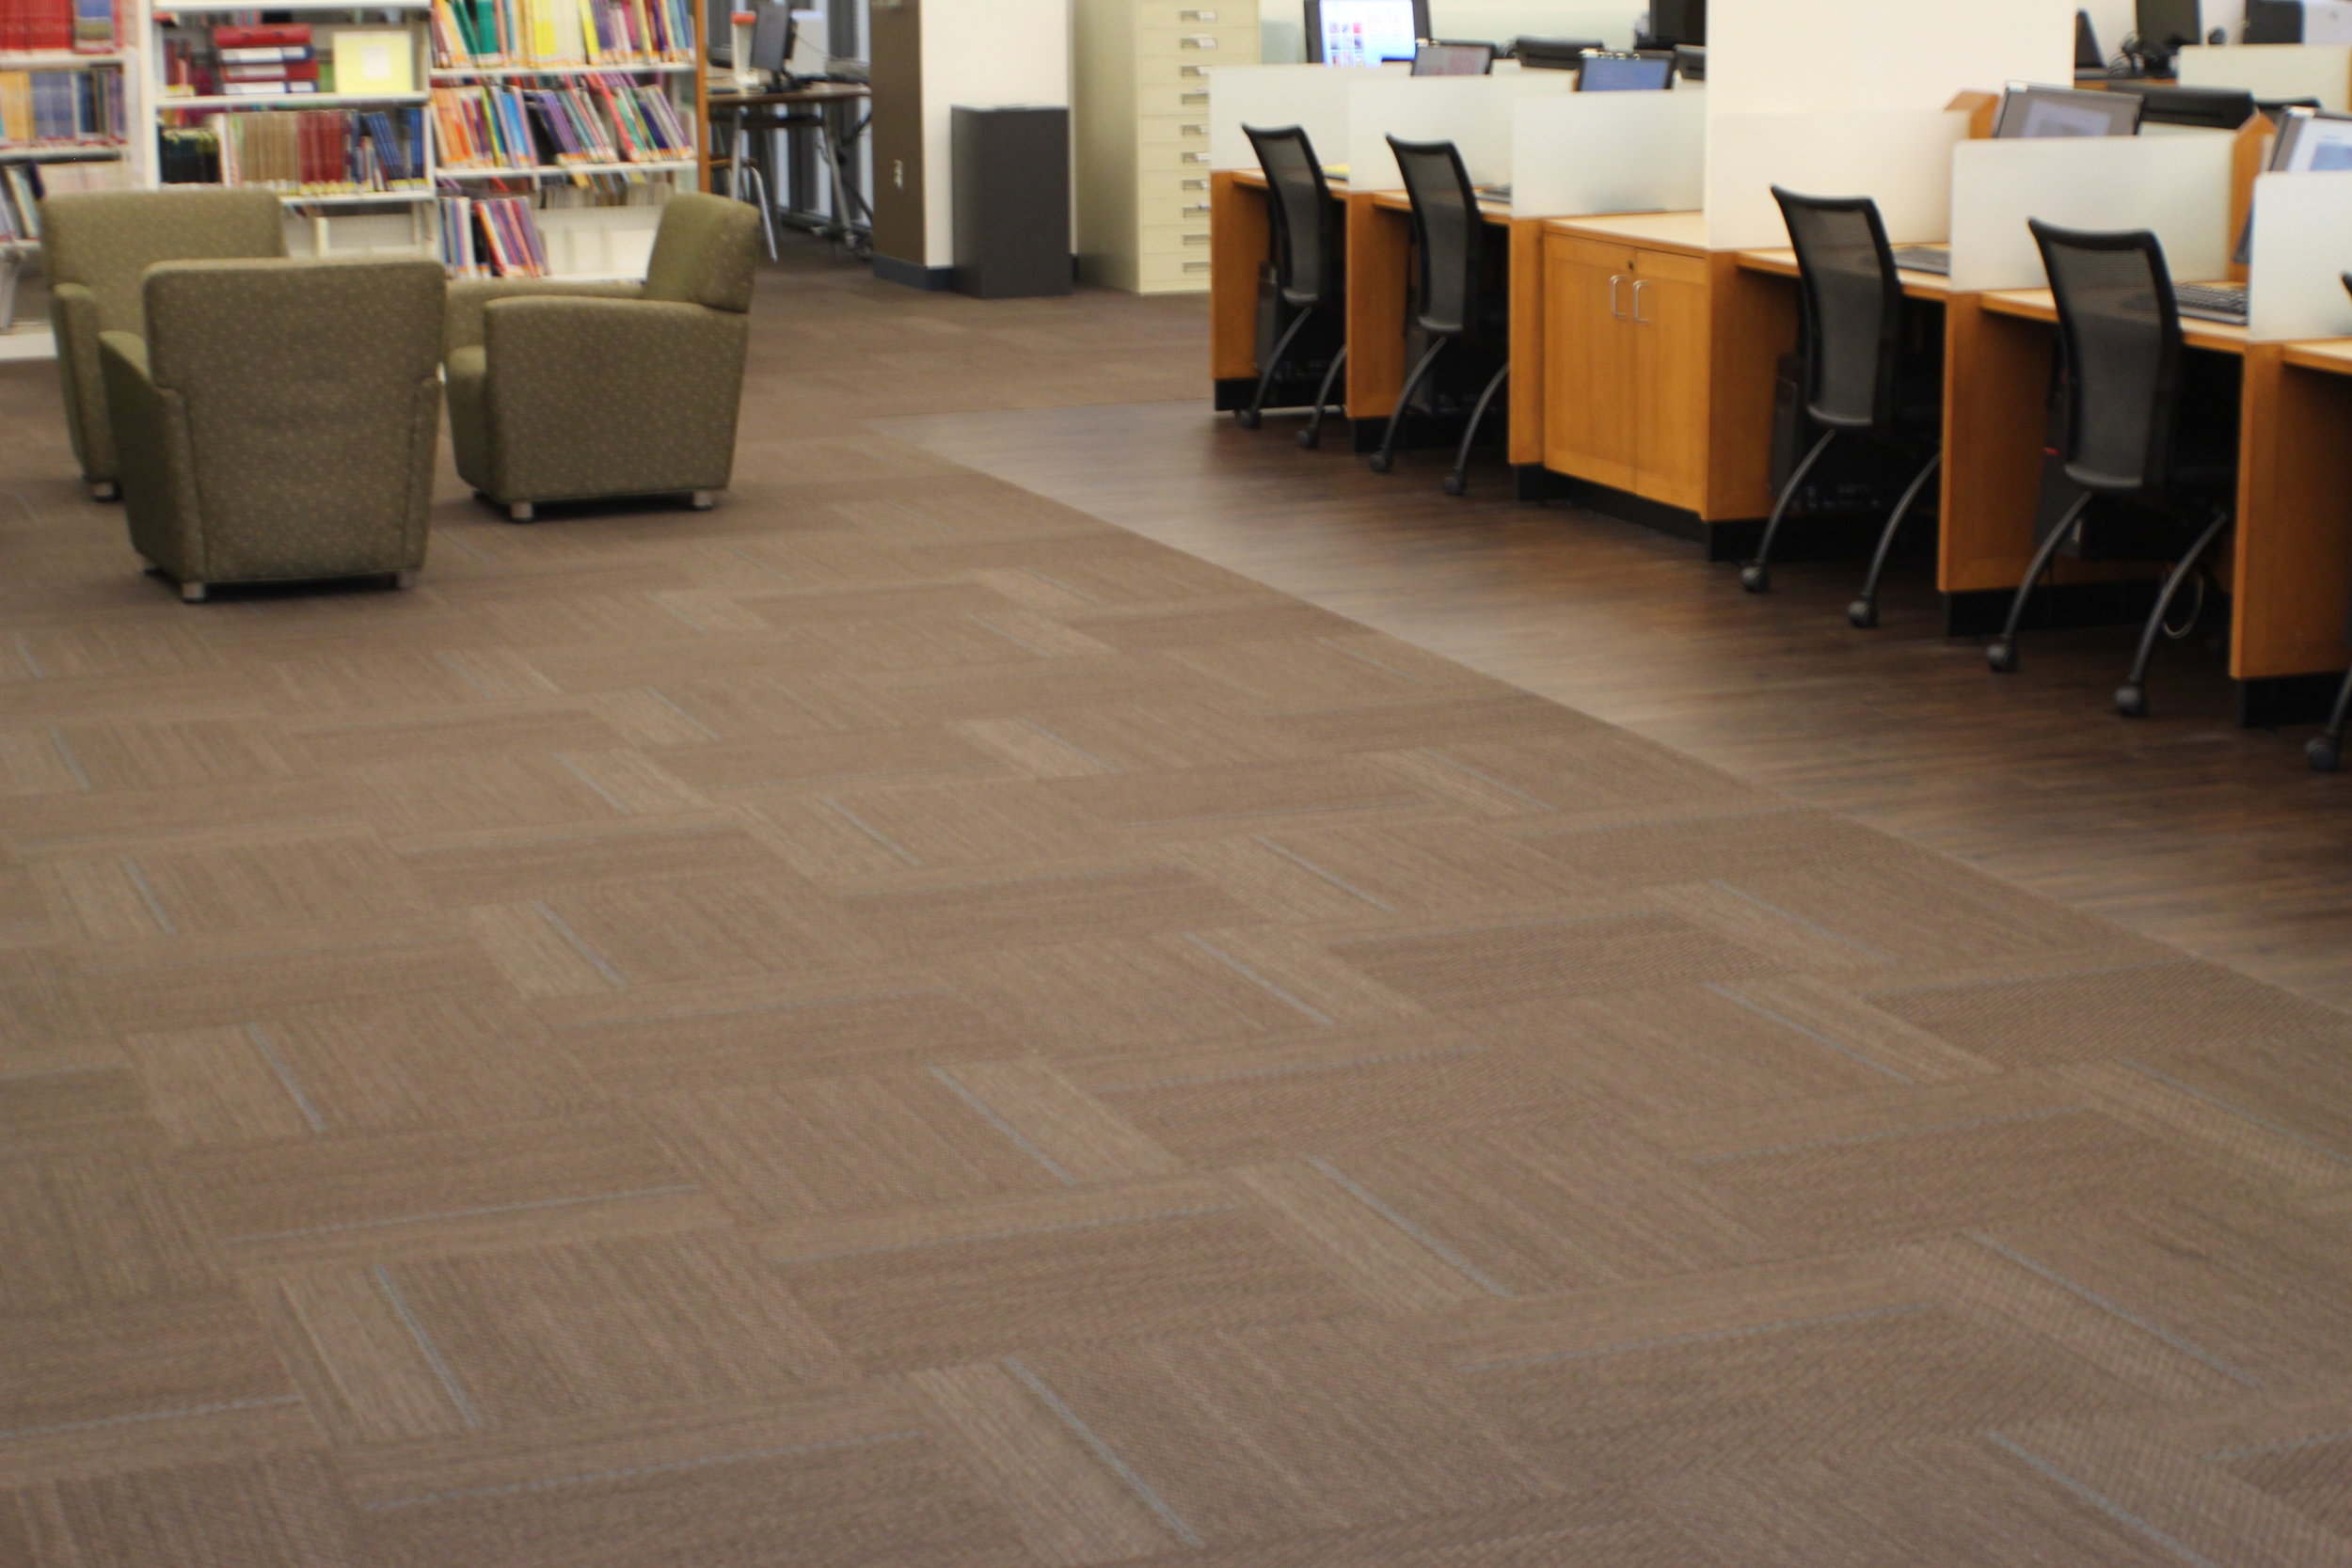 Watertown Public Library x Atkinson Carpet & Flooring